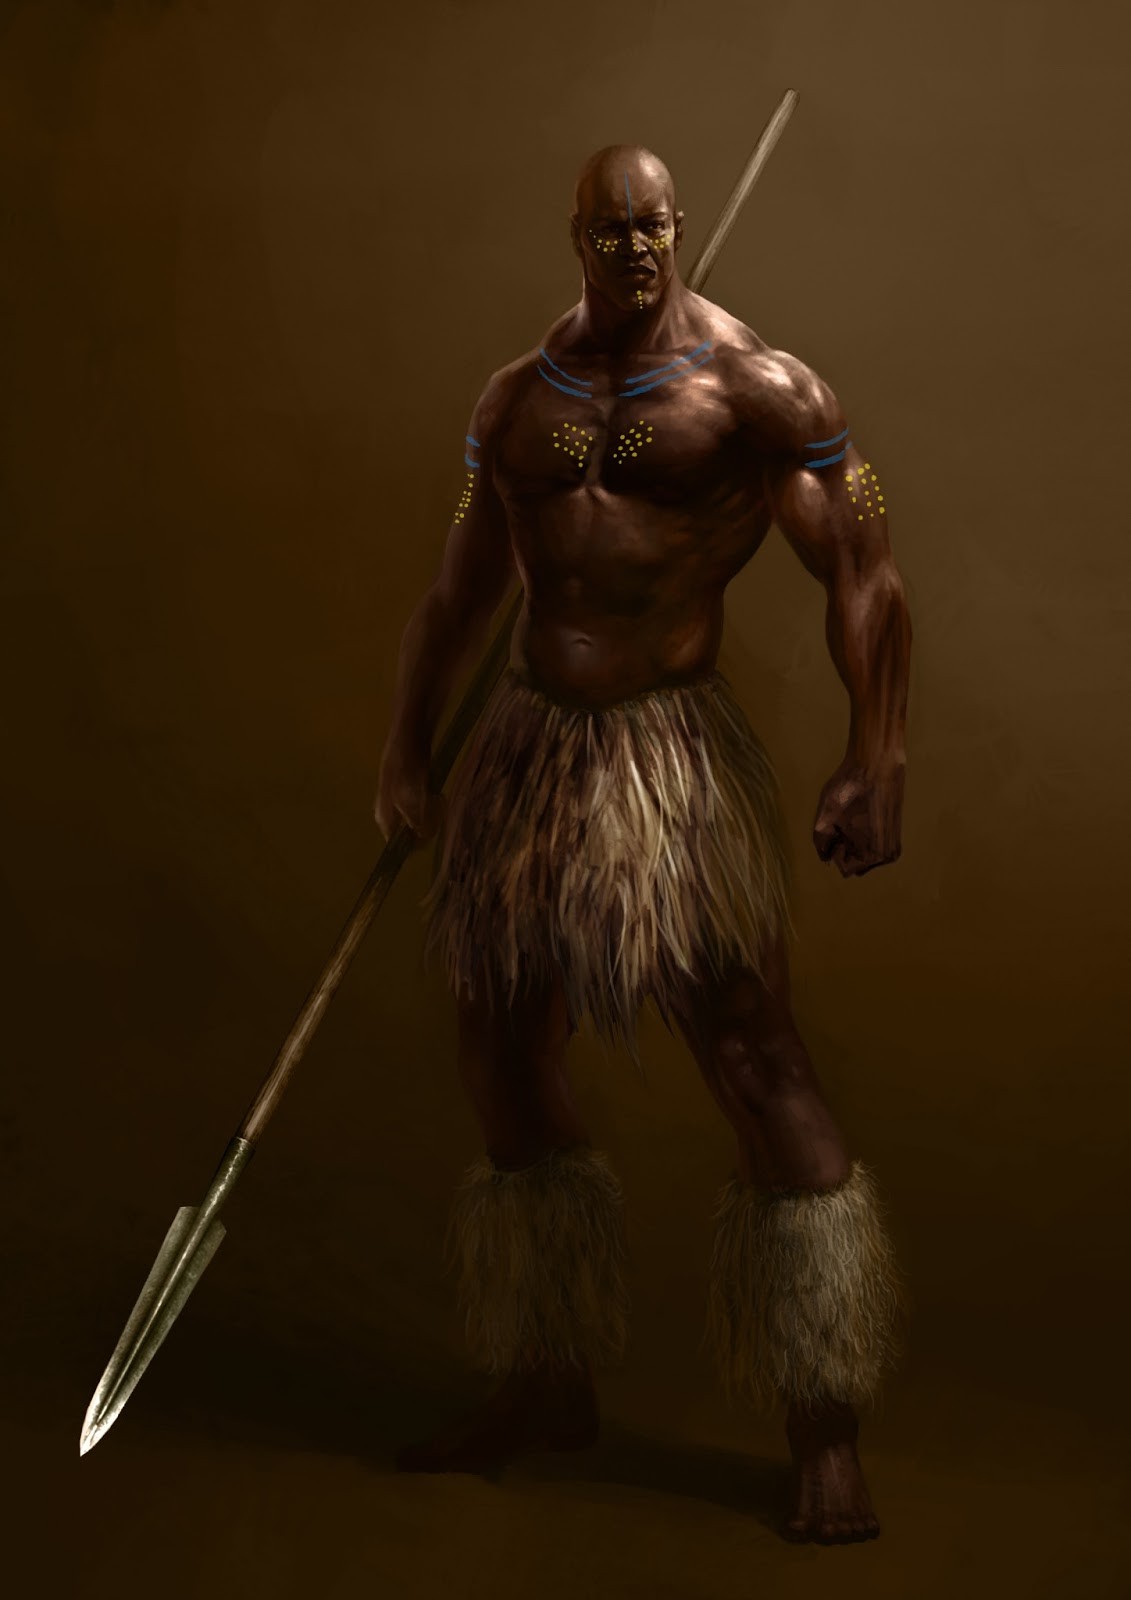 warrior, Bodybuilder, Looking at viewer, Ancient, Old, KwaZulu Natal, Fantasy art, Weapon, Spear, South African Wallpaper